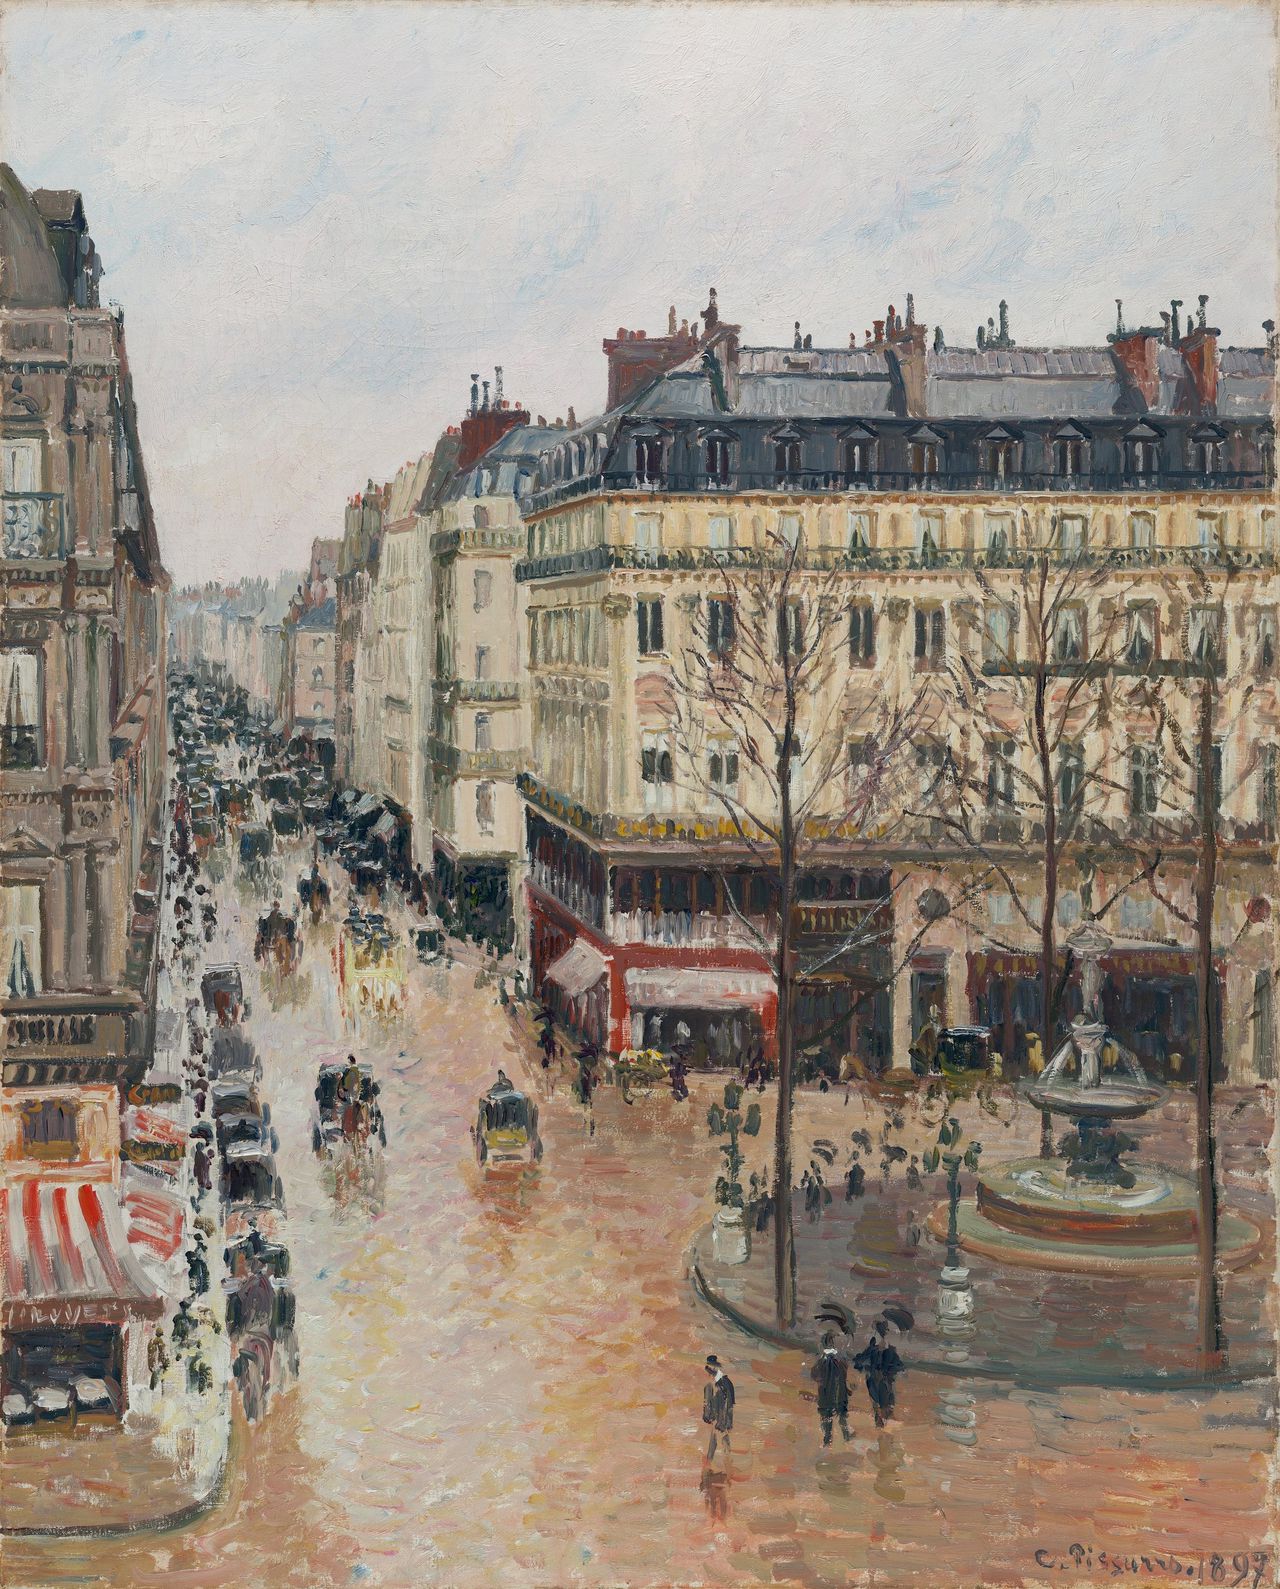 Het Parijse stadsgezicht Rue Saint-Honoré van Camille Pissarro.